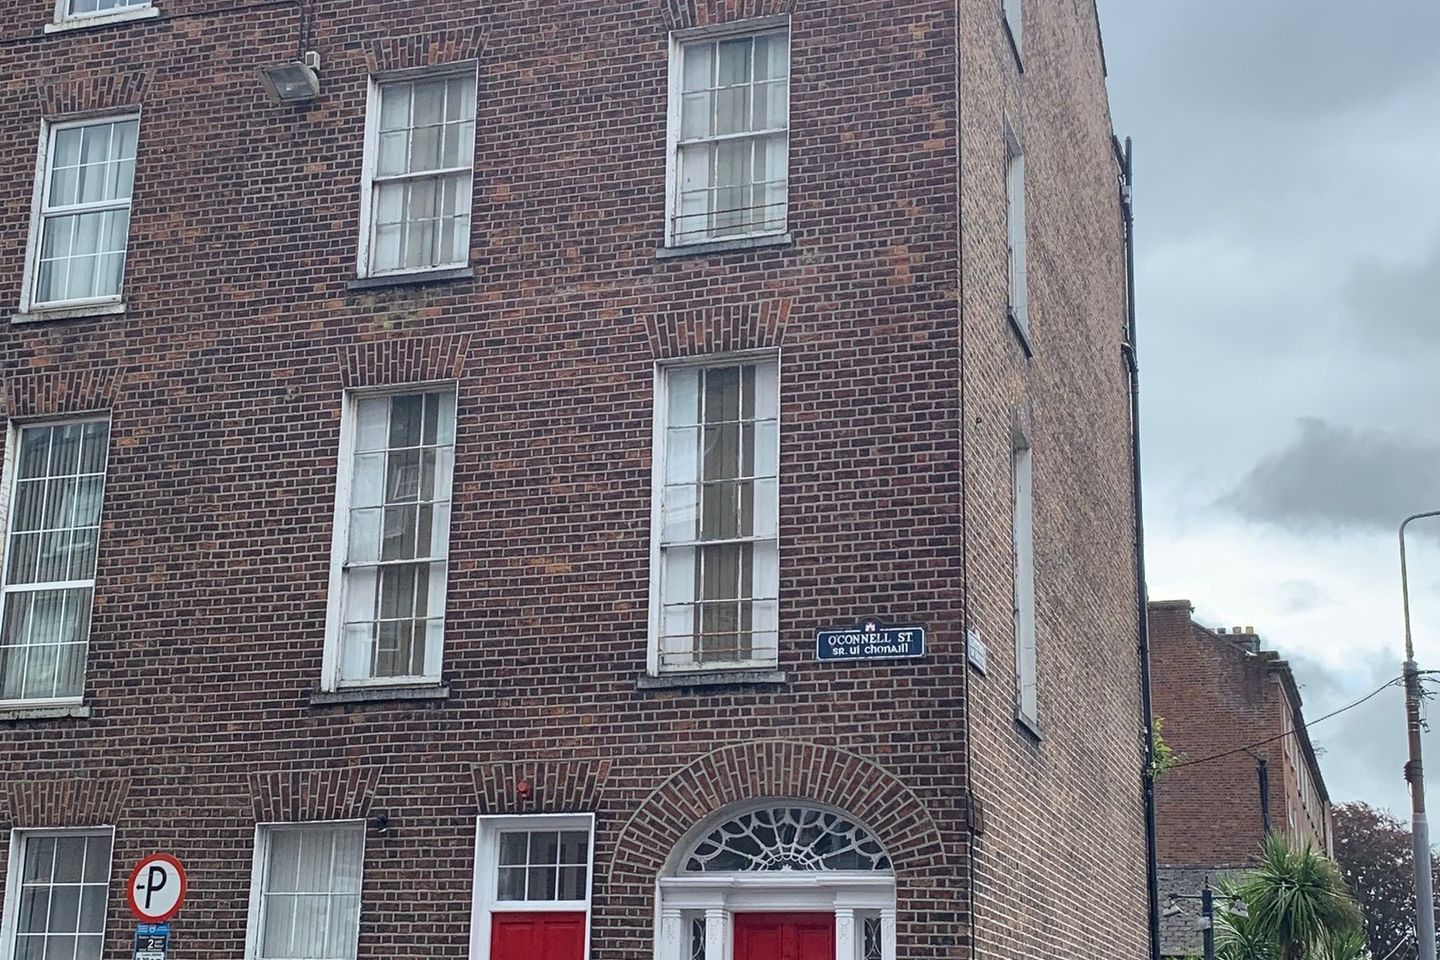 74 O'Connell Street, Limerick City, Co. Limerick, V94HWK4